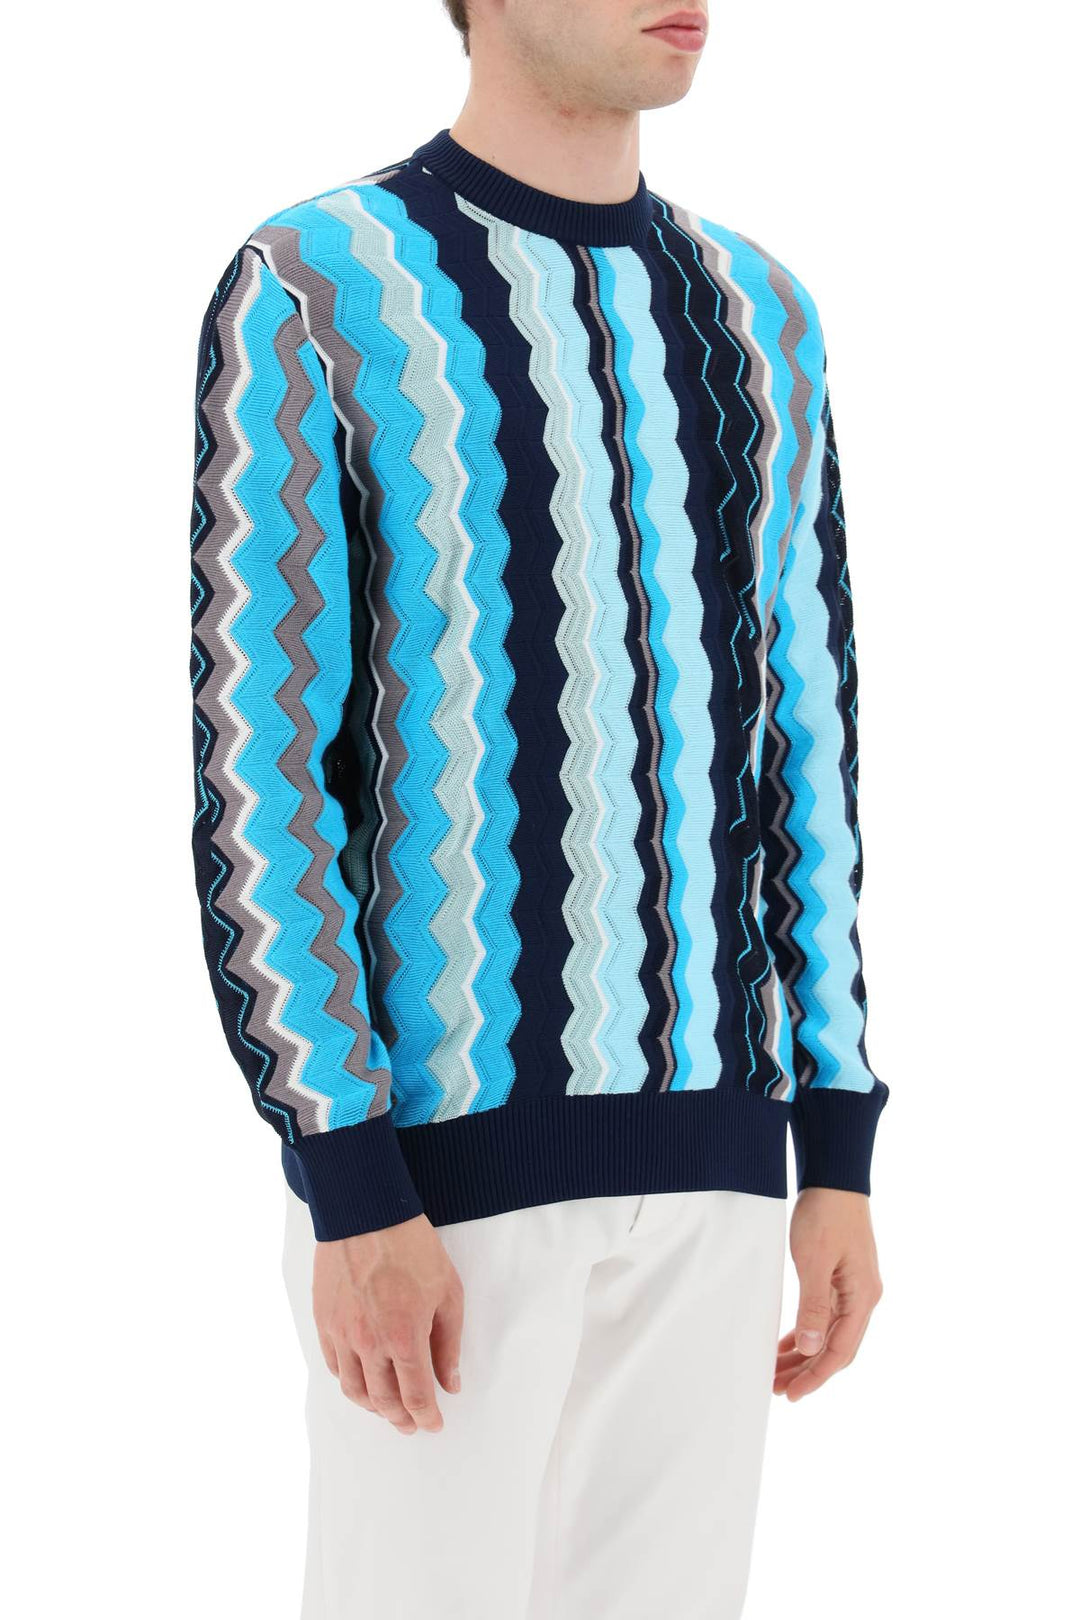 Missoni zigzag sweater-1